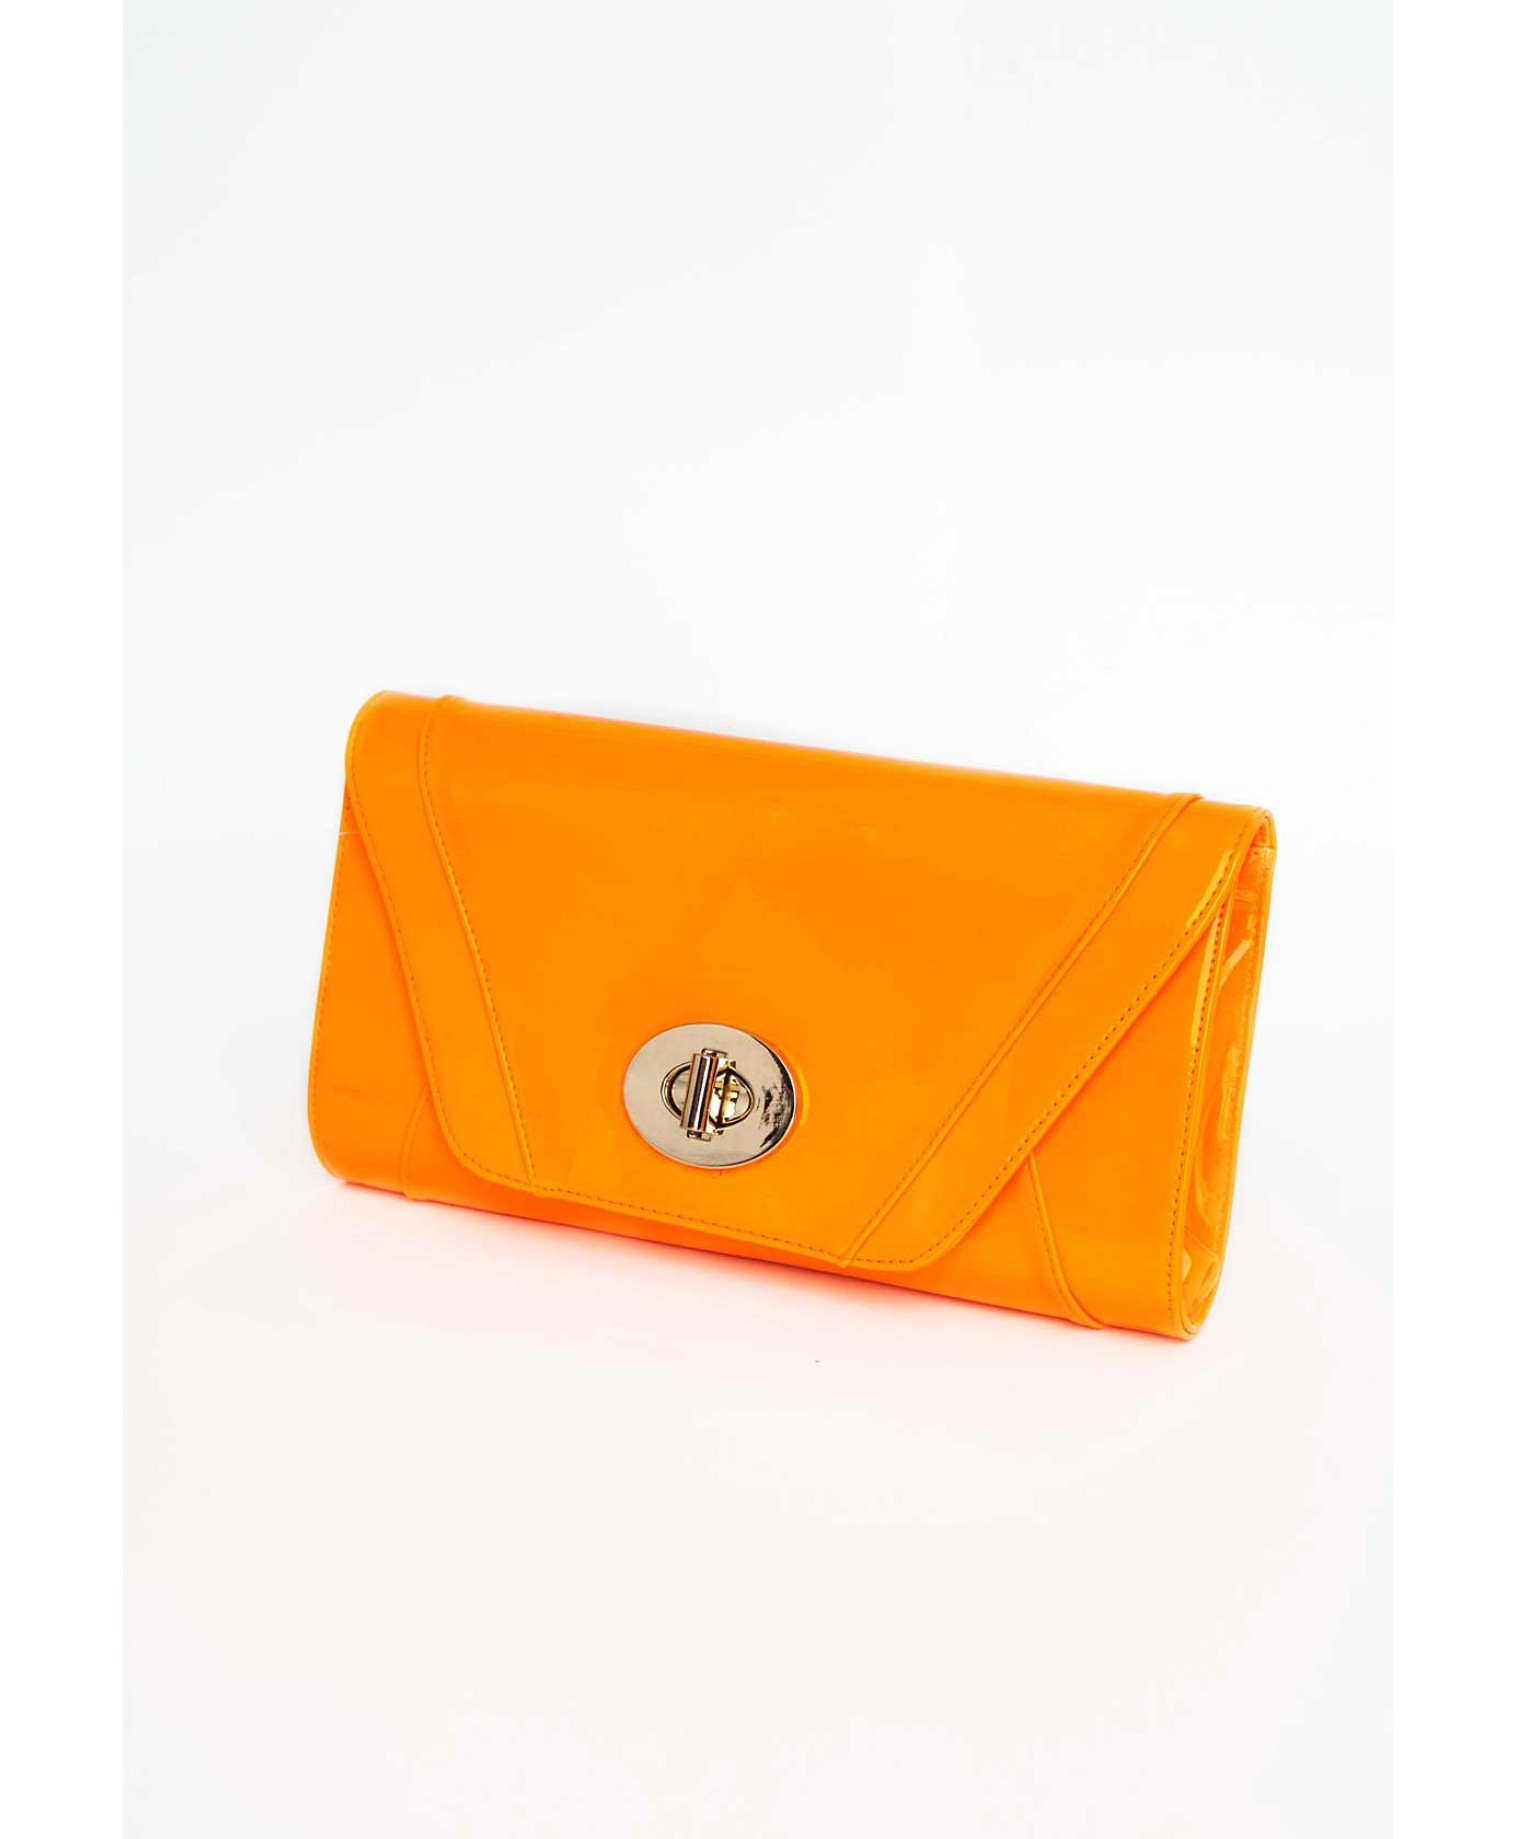 neon orange clutch bag